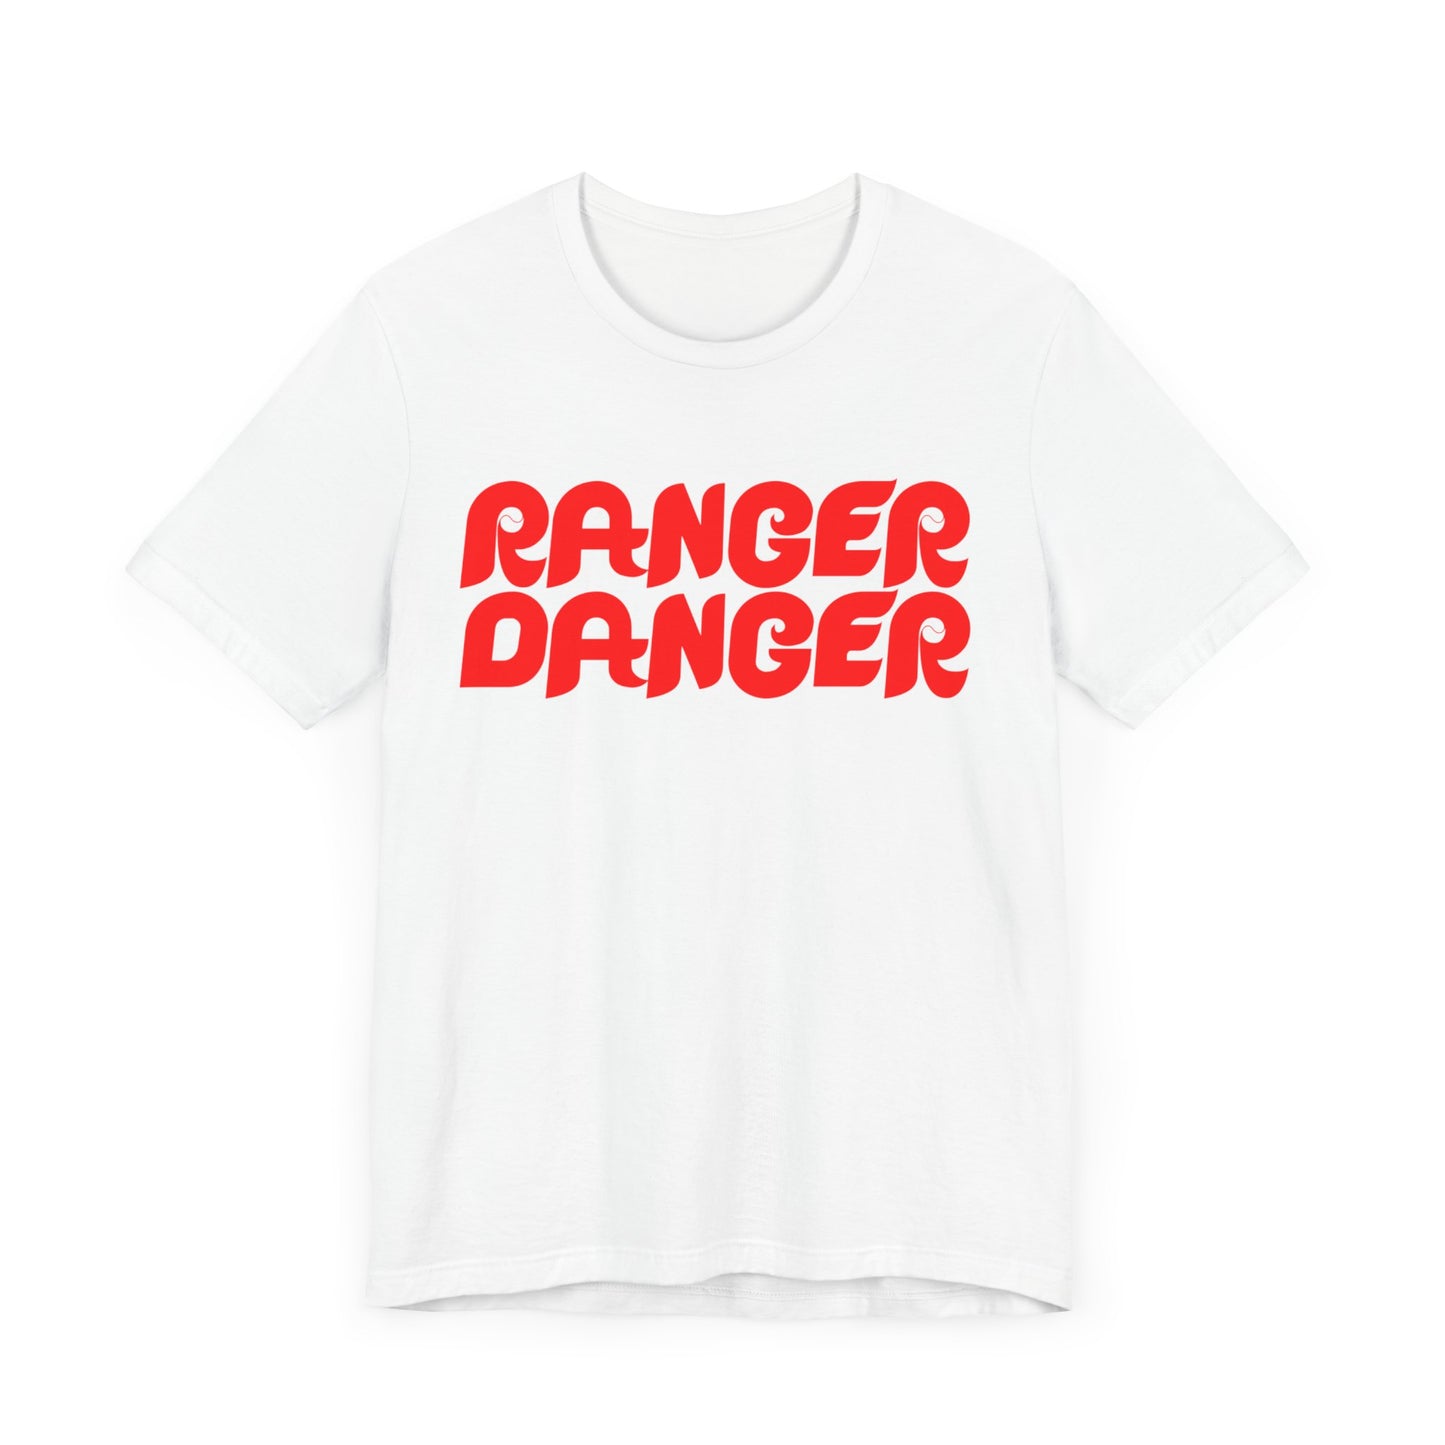 “Ranger Danger” Suarez Tee